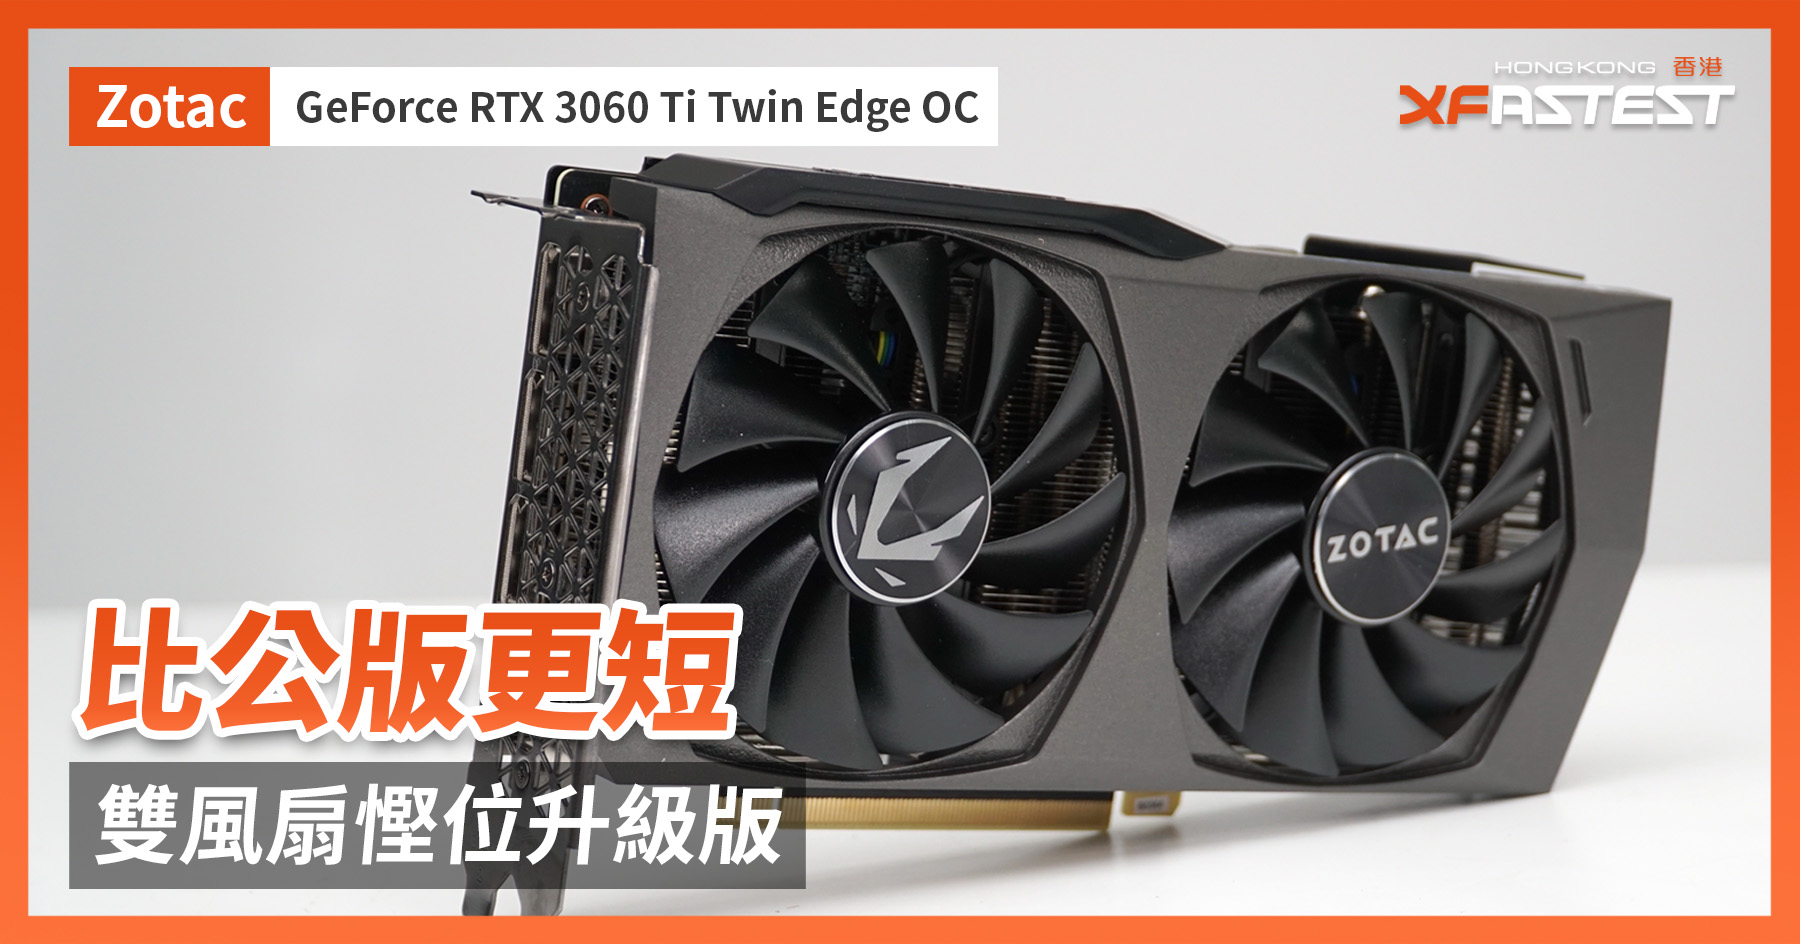 XF 開箱] 比公版更短雙風扇慳位升級版Zotac GeForce RTX 3060 Ti Twin